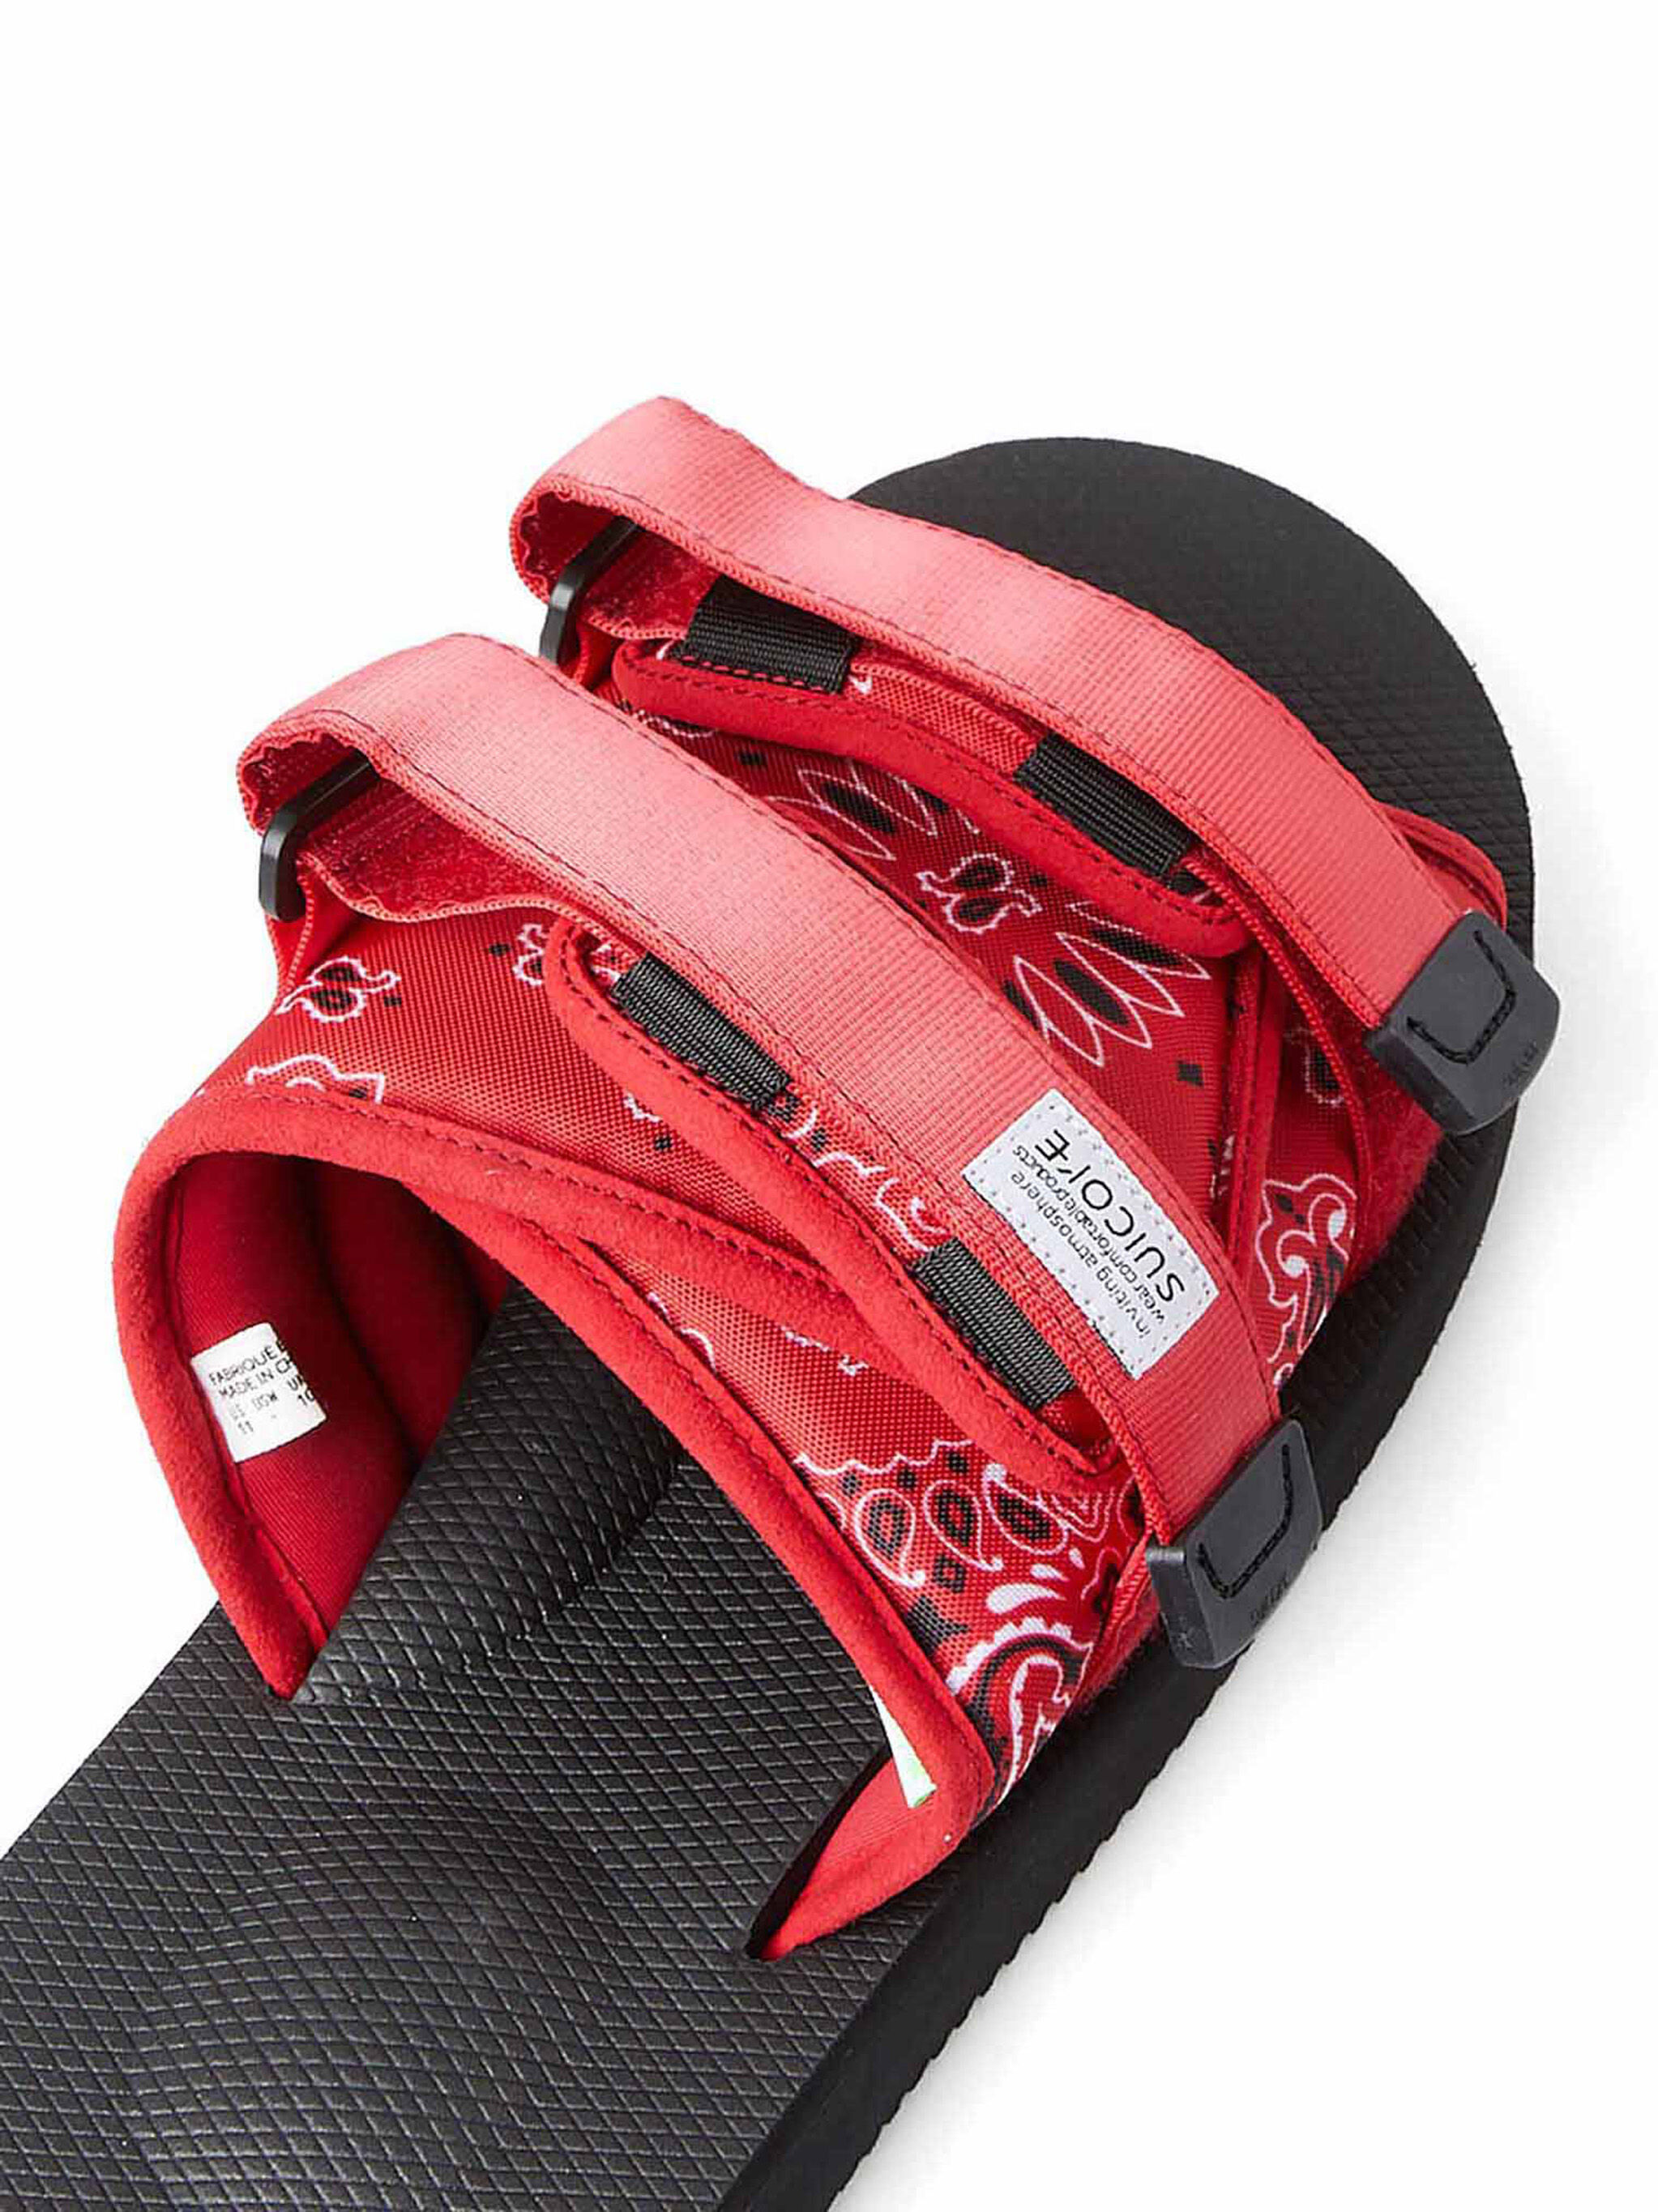 Suicoke Moto-Cab Bandana Red Sandals | THE FLAMEL®